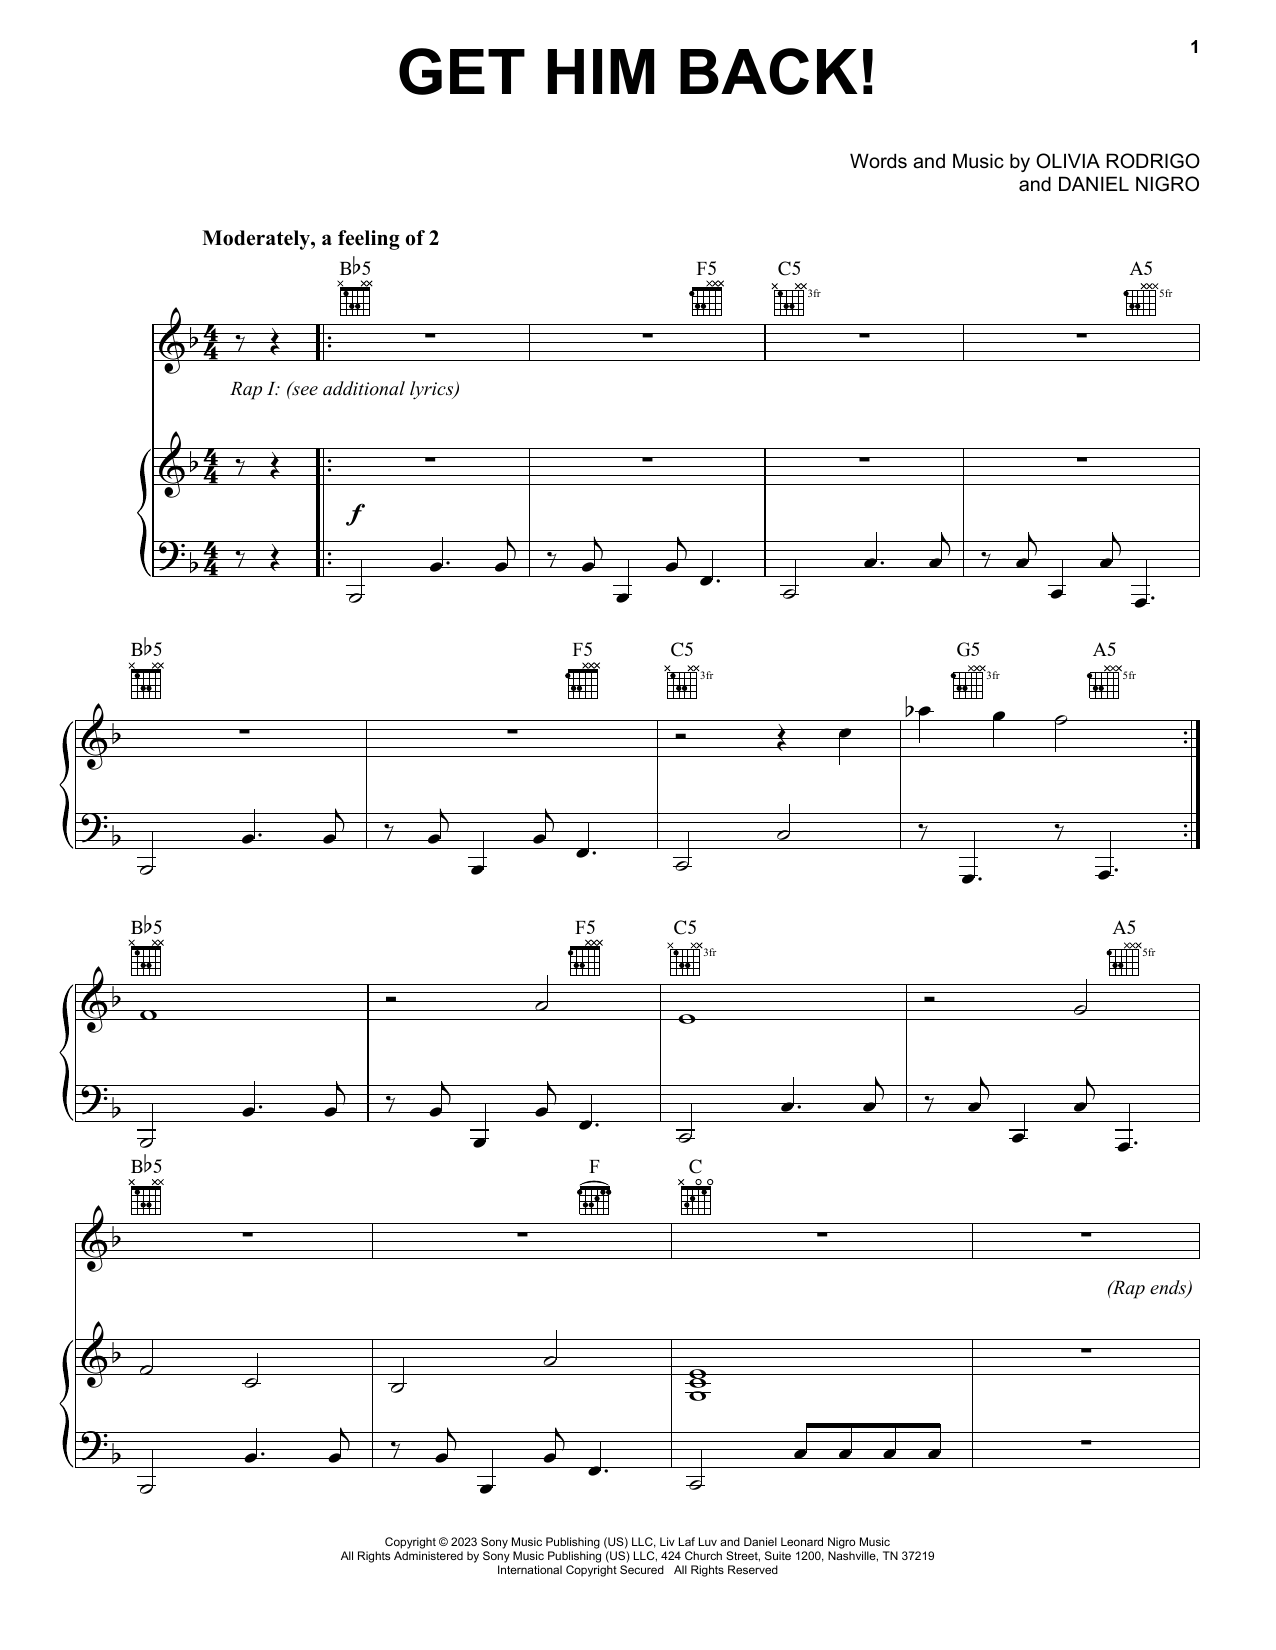 Olivia Rodrigo get him back! Sheet Music Notes & Chords for Piano, Vocal & Guitar Chords (Right-Hand Melody) - Download or Print PDF